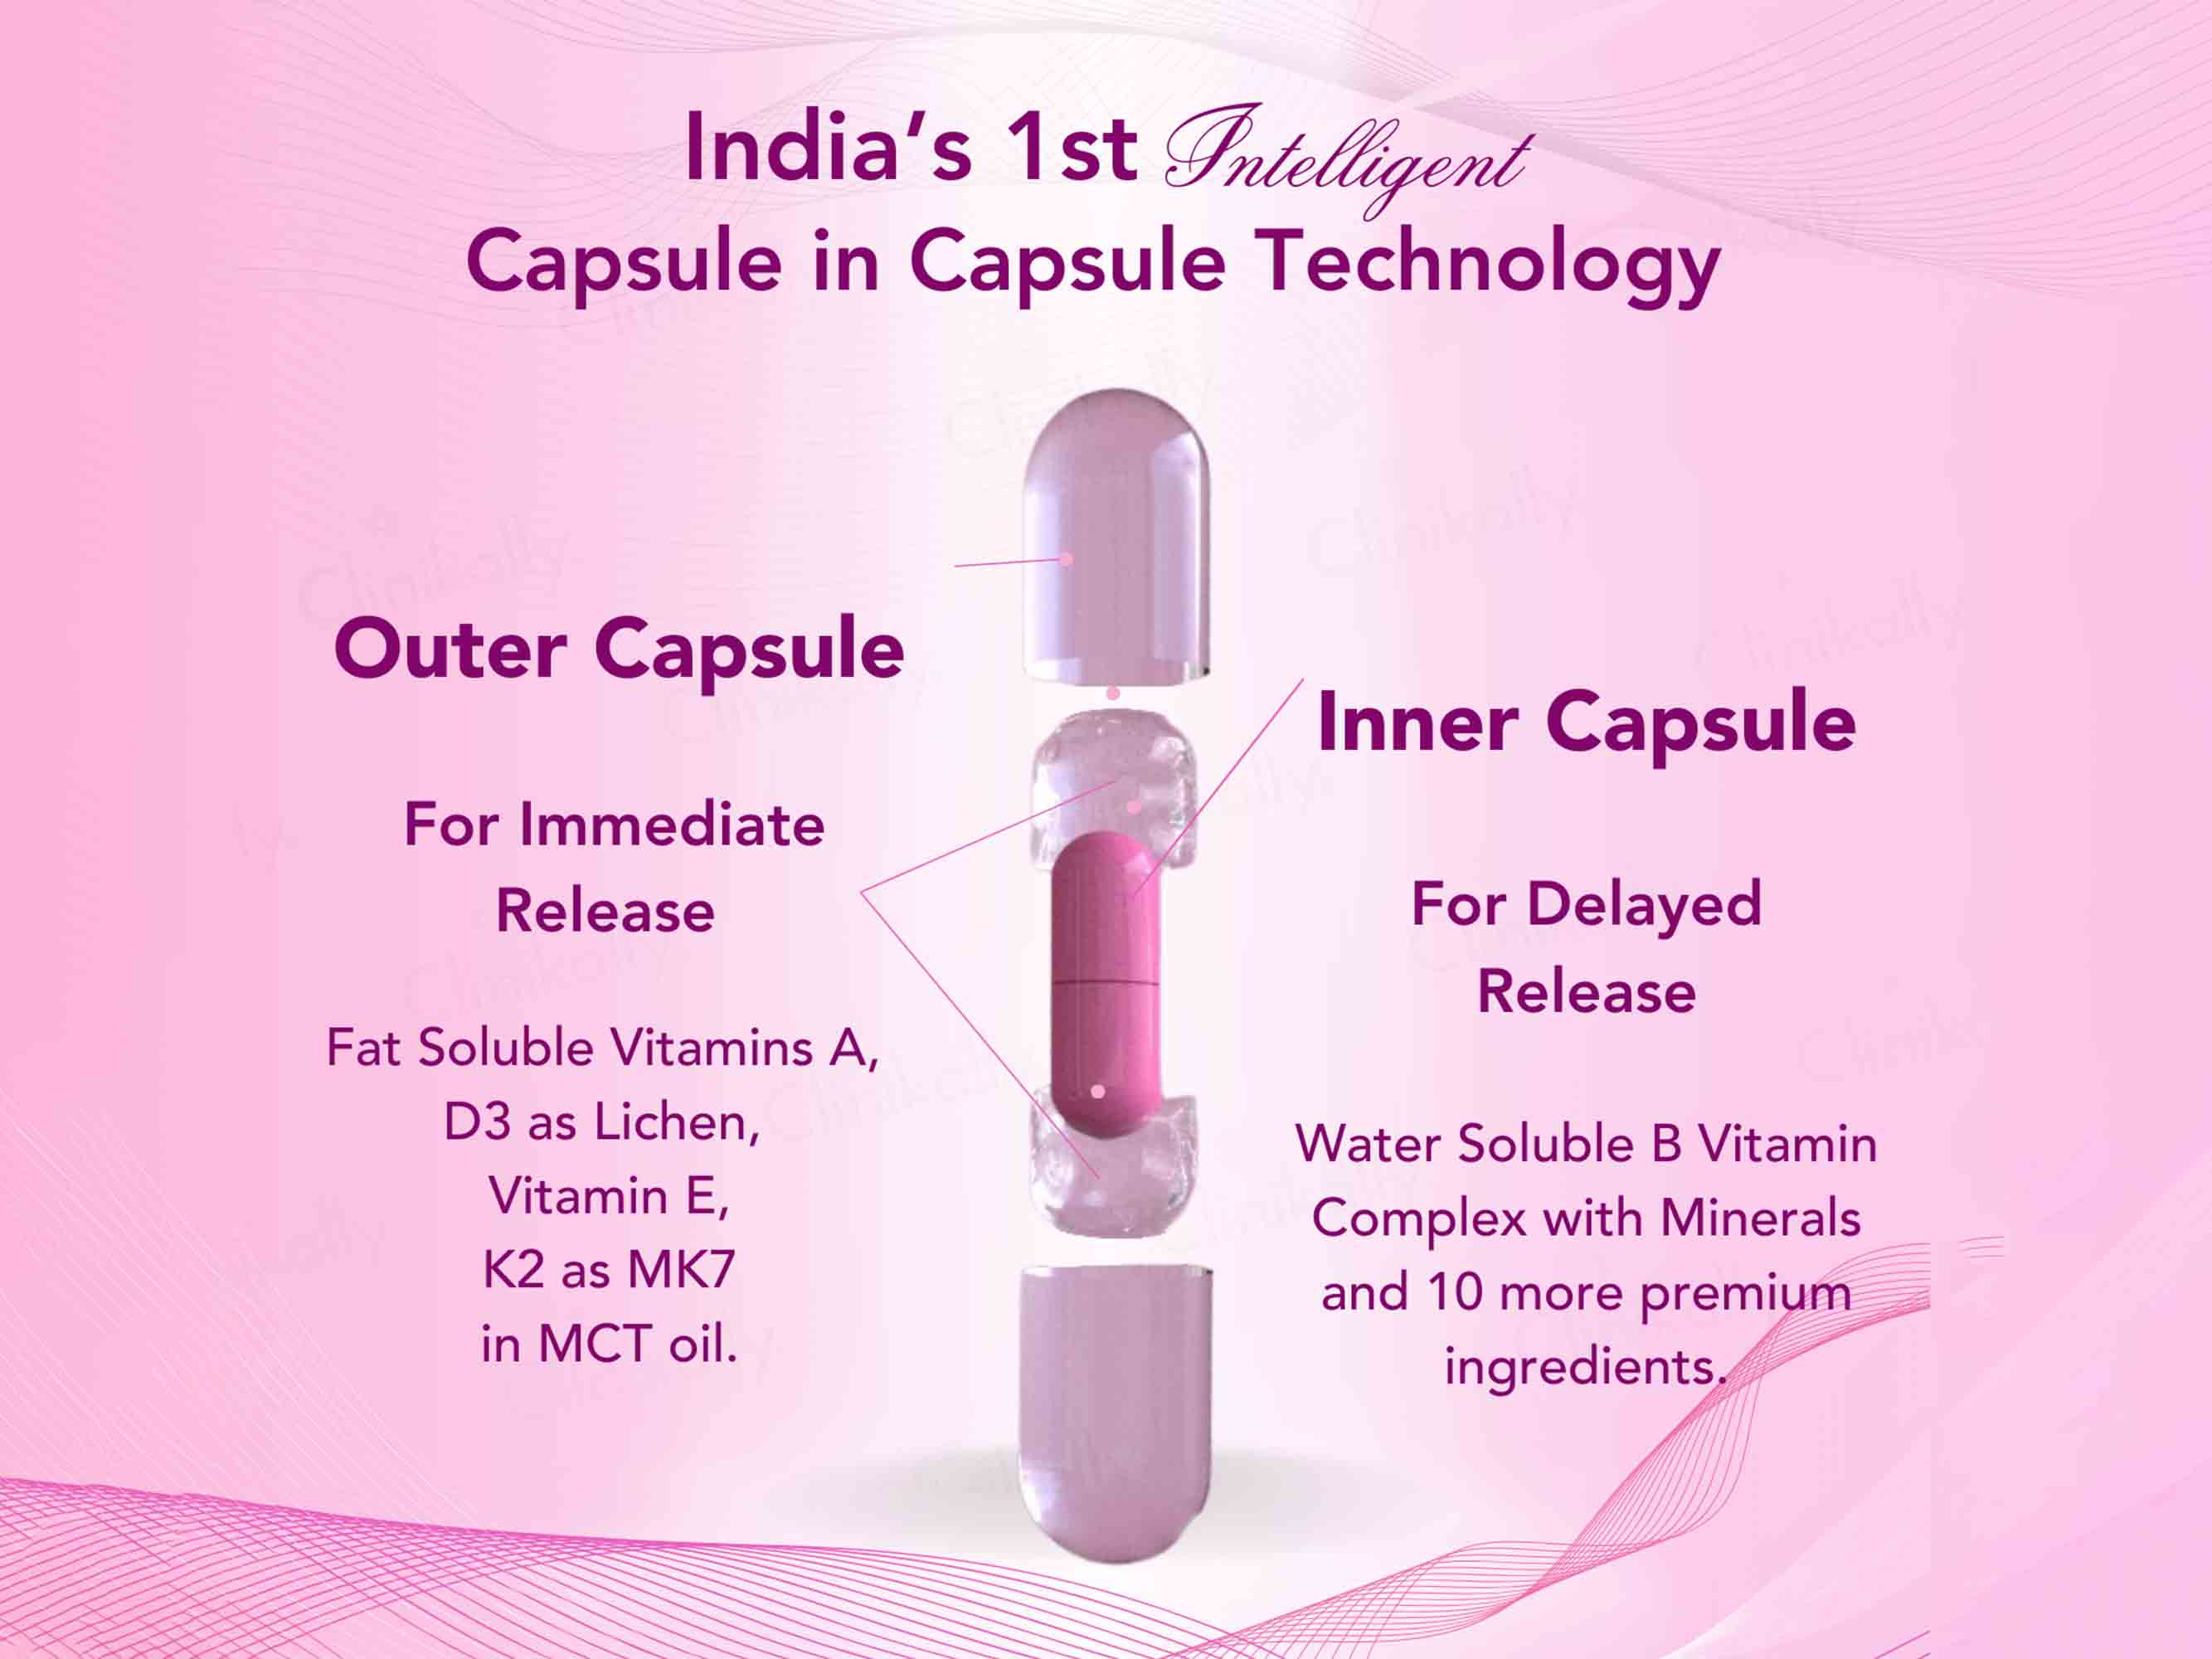 WishNew Wellness Daily Ritual Multivitamin Capsule For Women 50+